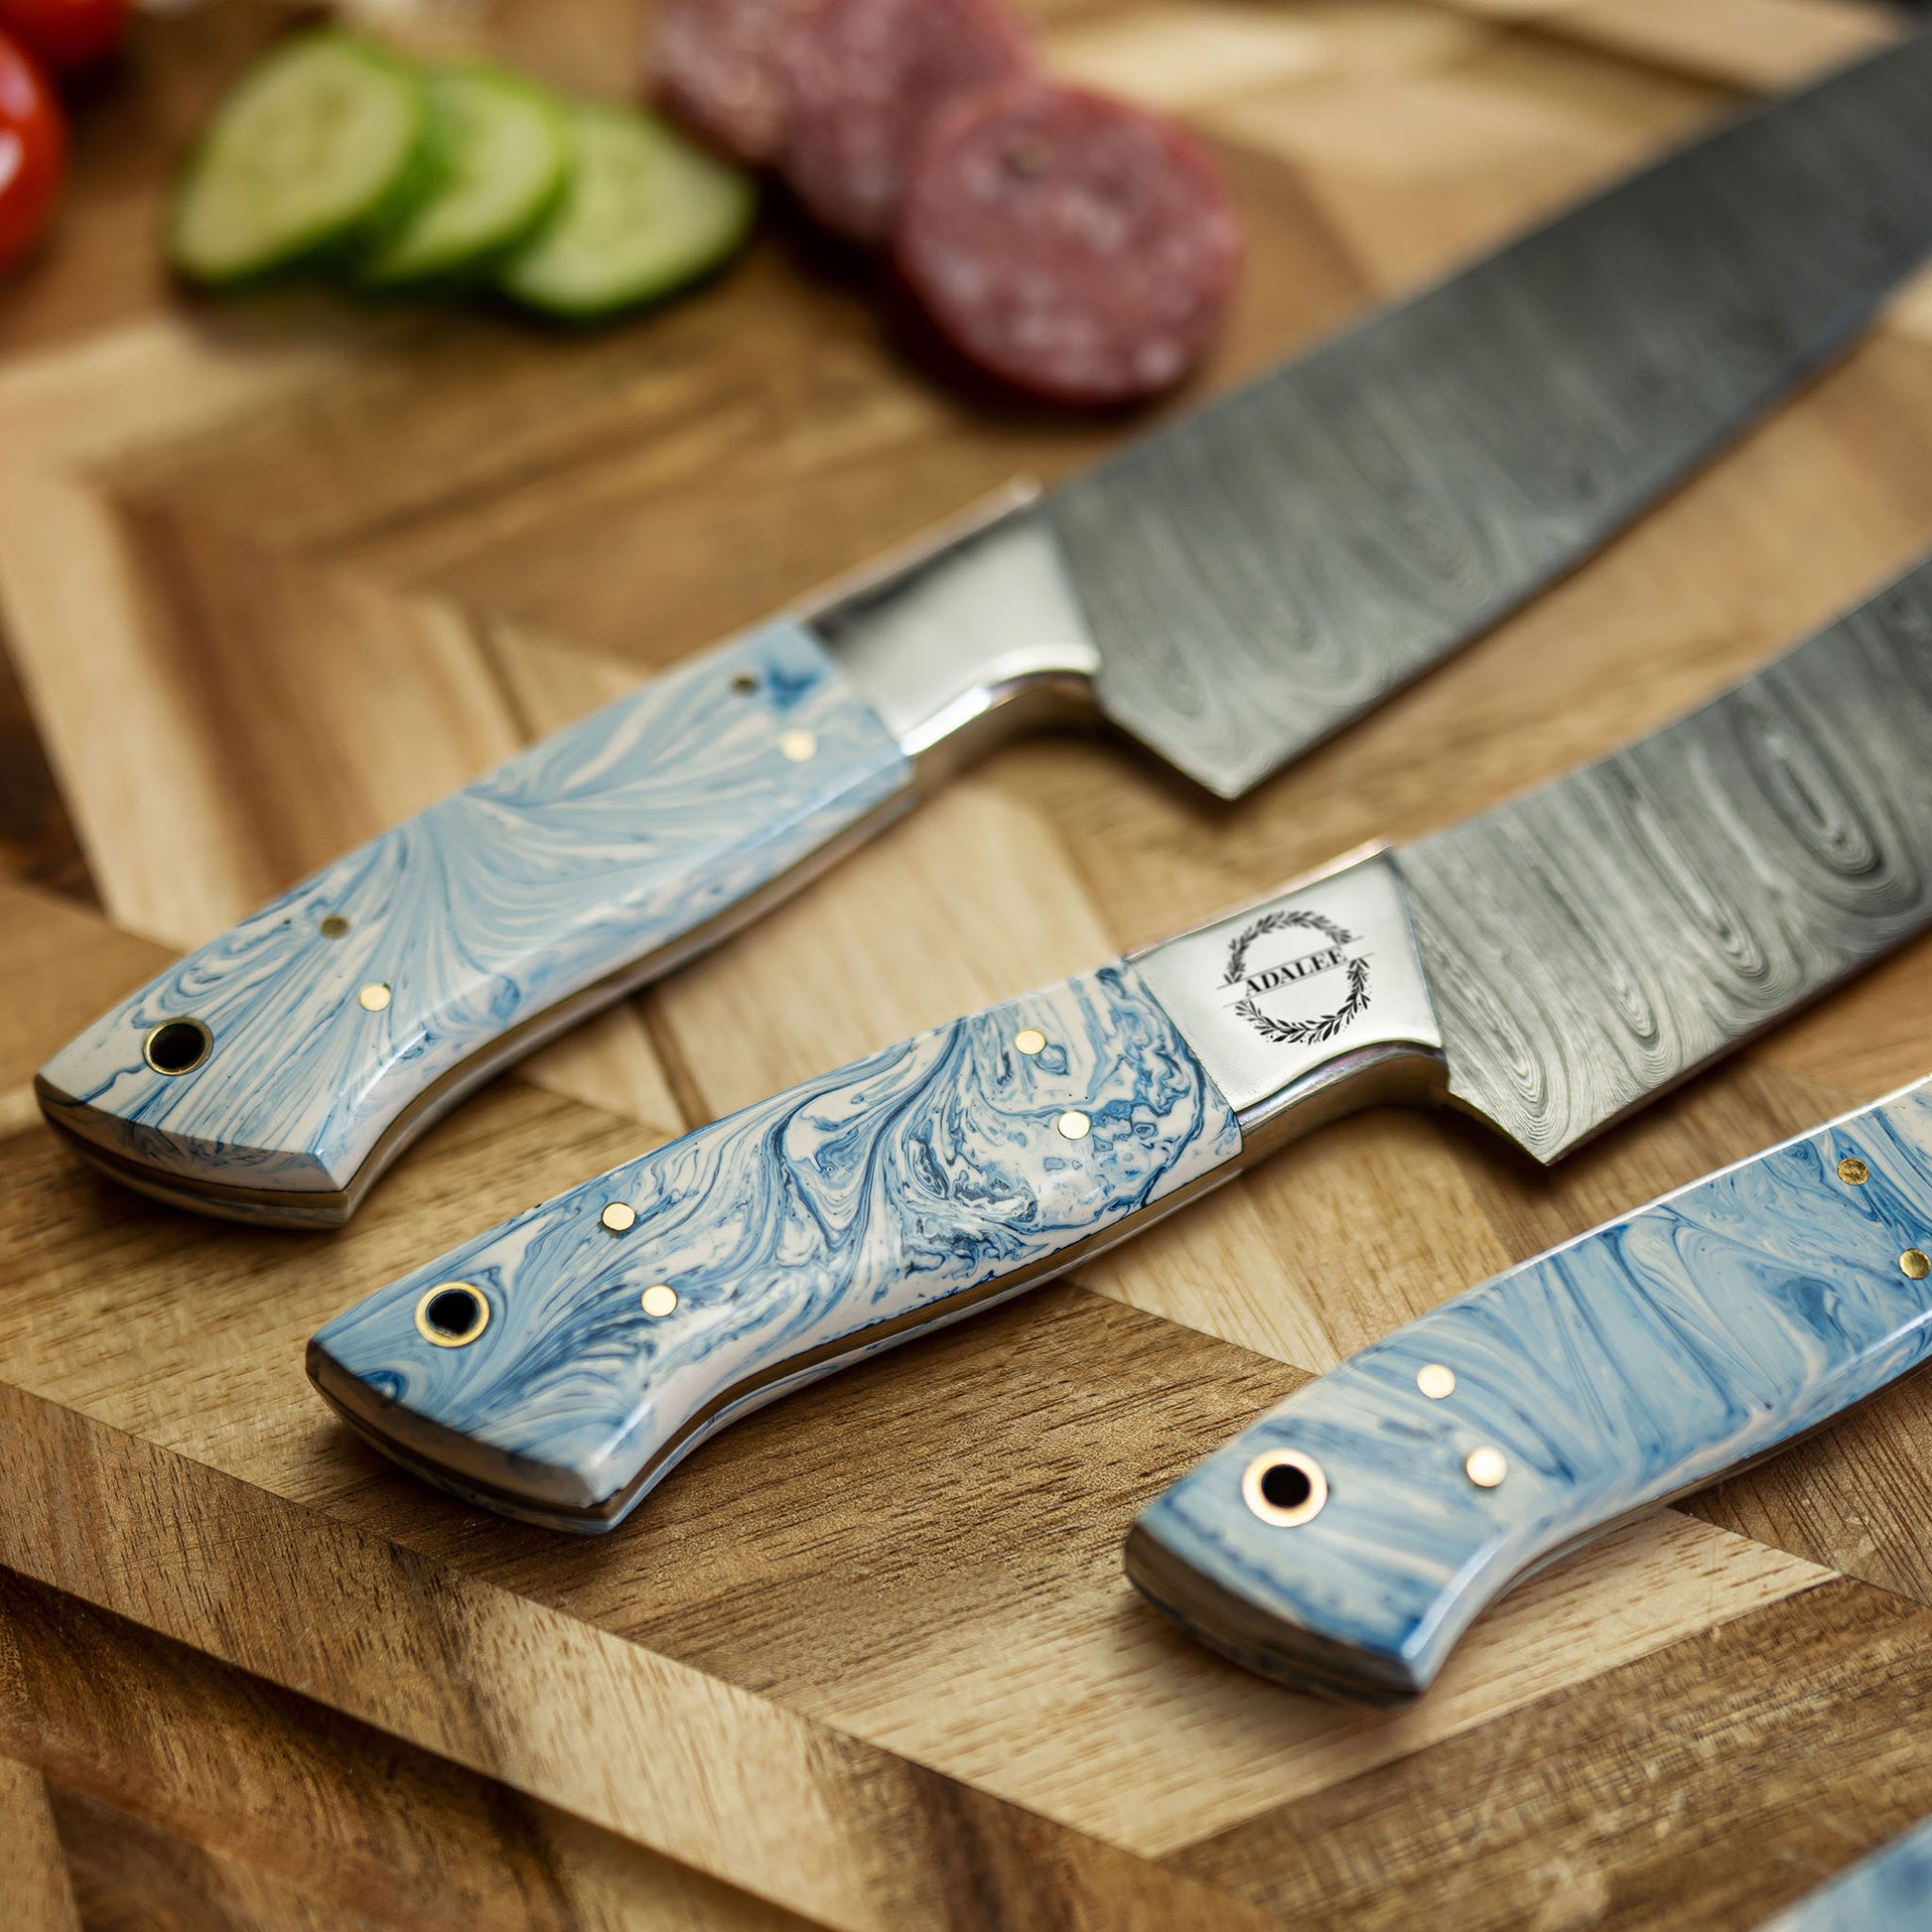 Polish custom 100% handmade kitchen knife.